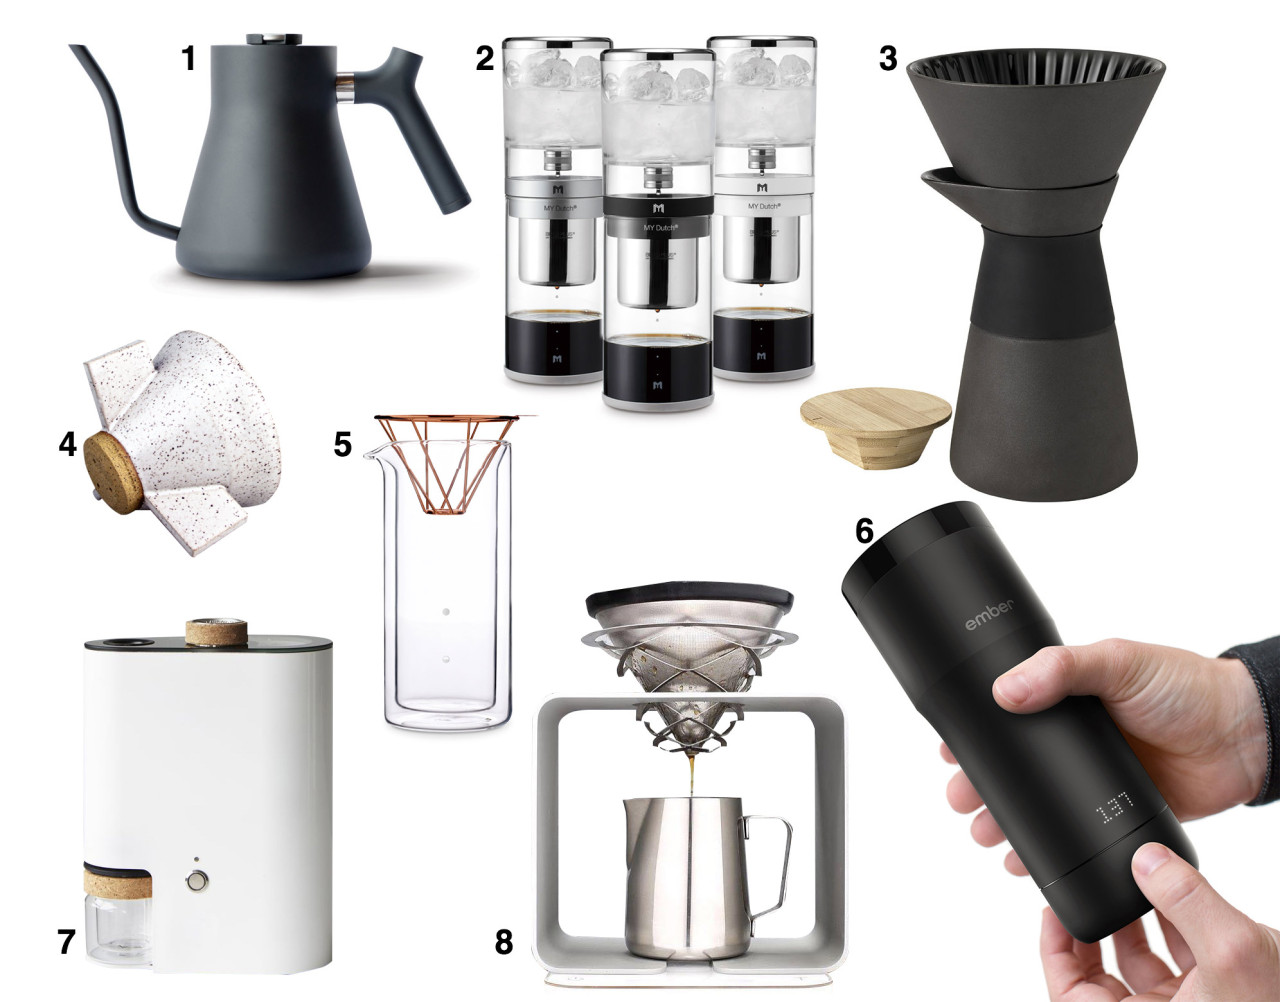 https://design-milk.com/images/2016/04/8-coffee-design-collection.jpg